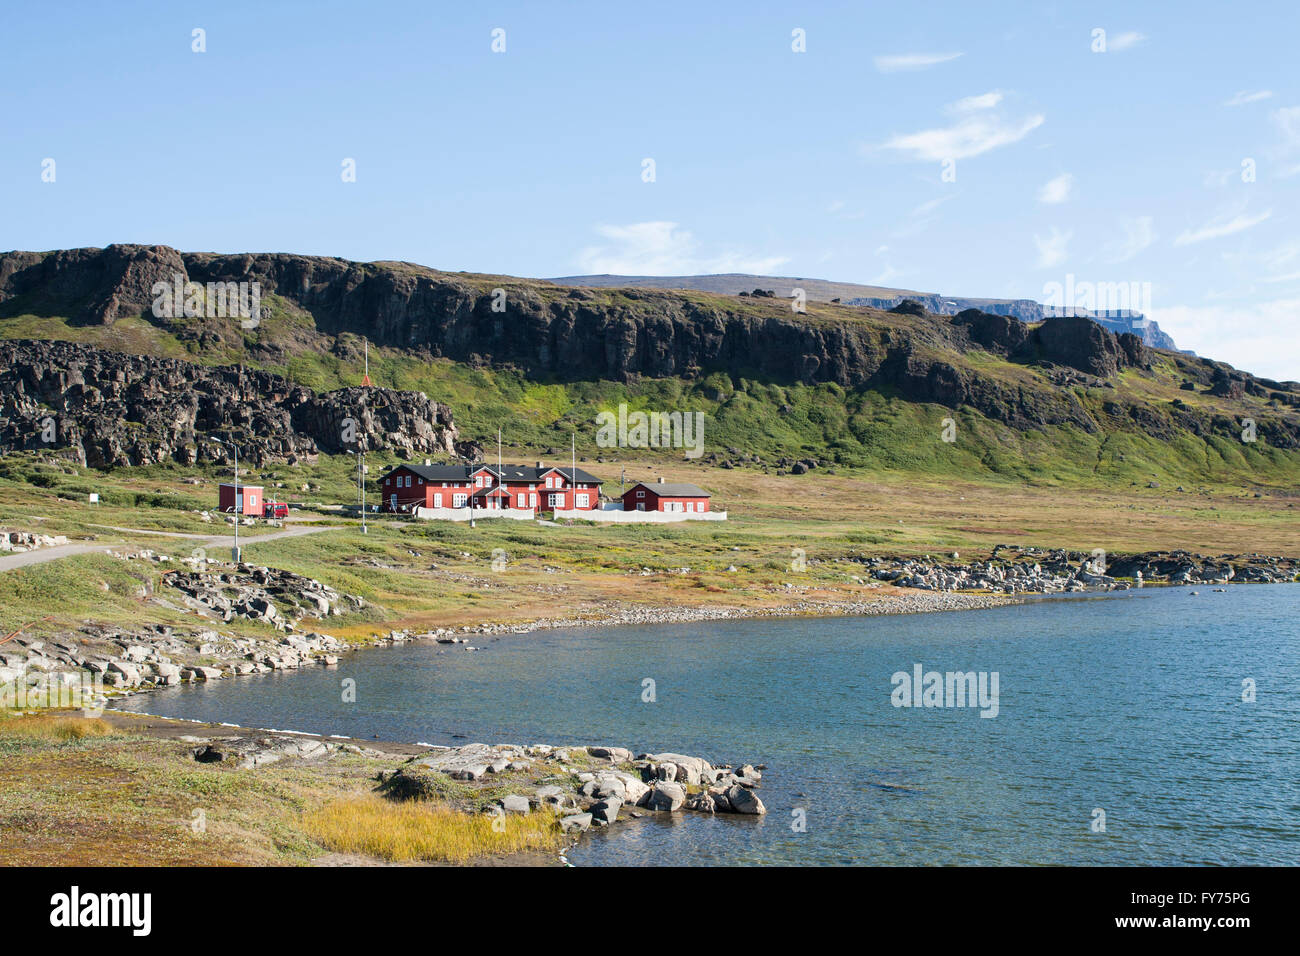 Arktisk Station, Arctic Station, Qeqertarsuaq, Greenland Stock Photo